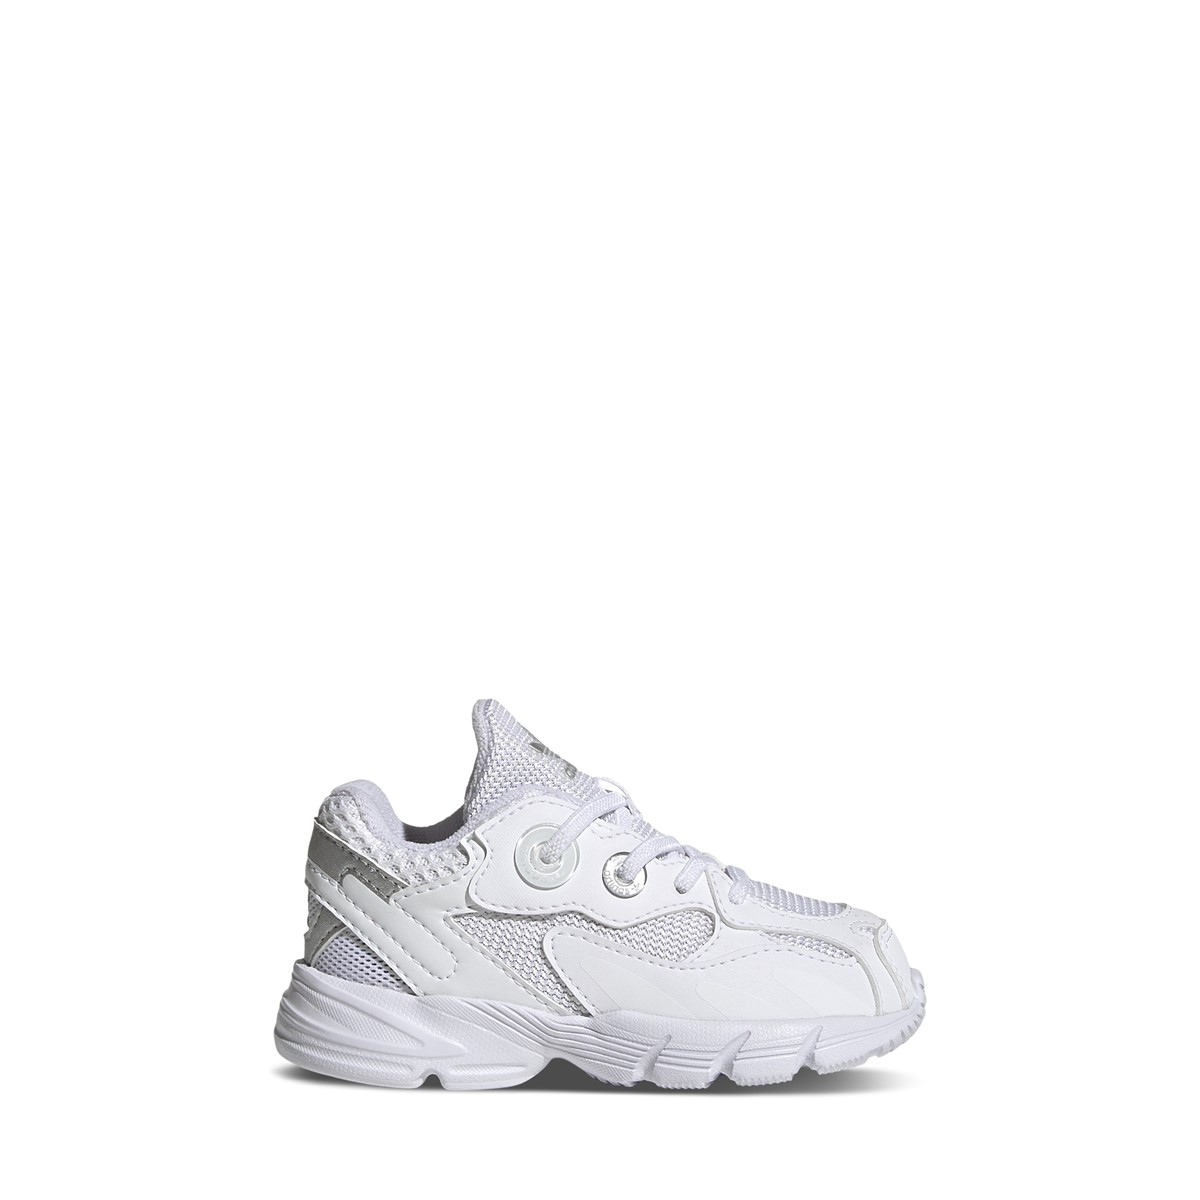 Toddler's Astir Sneakers in White